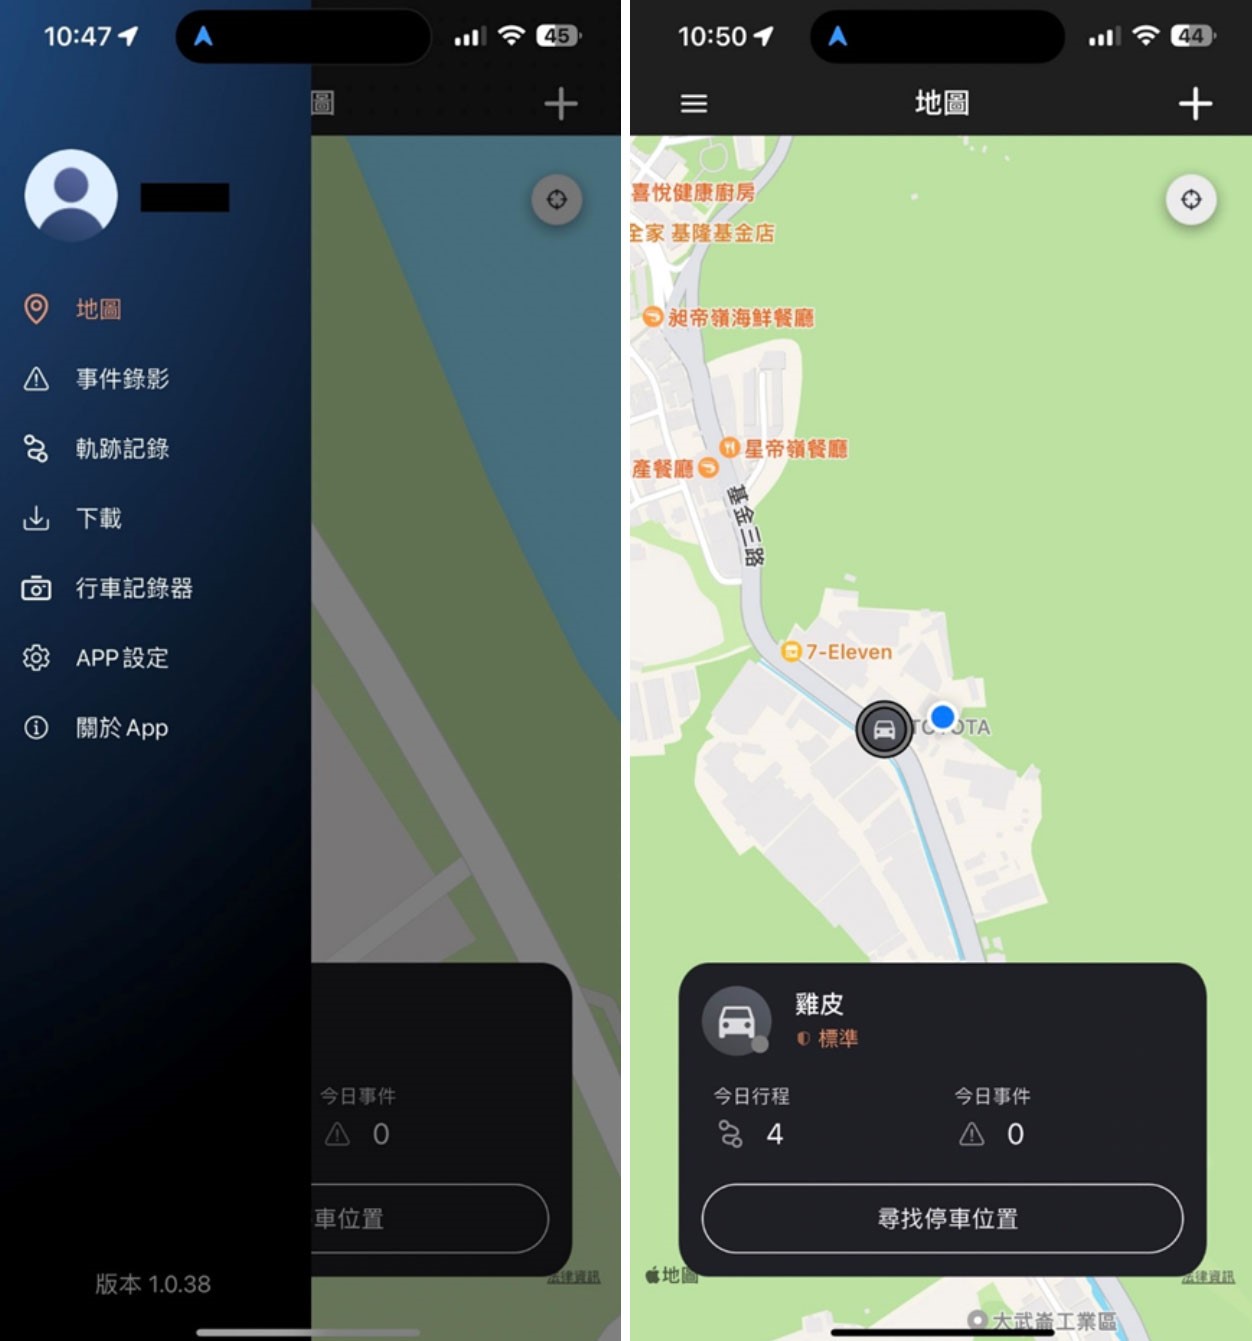 MioNext App 安裝設定完成後打開左上選單後就可以看到地圖、事件錄影、軌跡記錄、行車記錄器設定等選項，像在地圖模式中停車熄火之後就會顯示尋找停車位置，對於會忘記自己停車位置的人來說，這個功能可以更輕鬆方便的找到停車位置（圖片來源：網友姜浩）